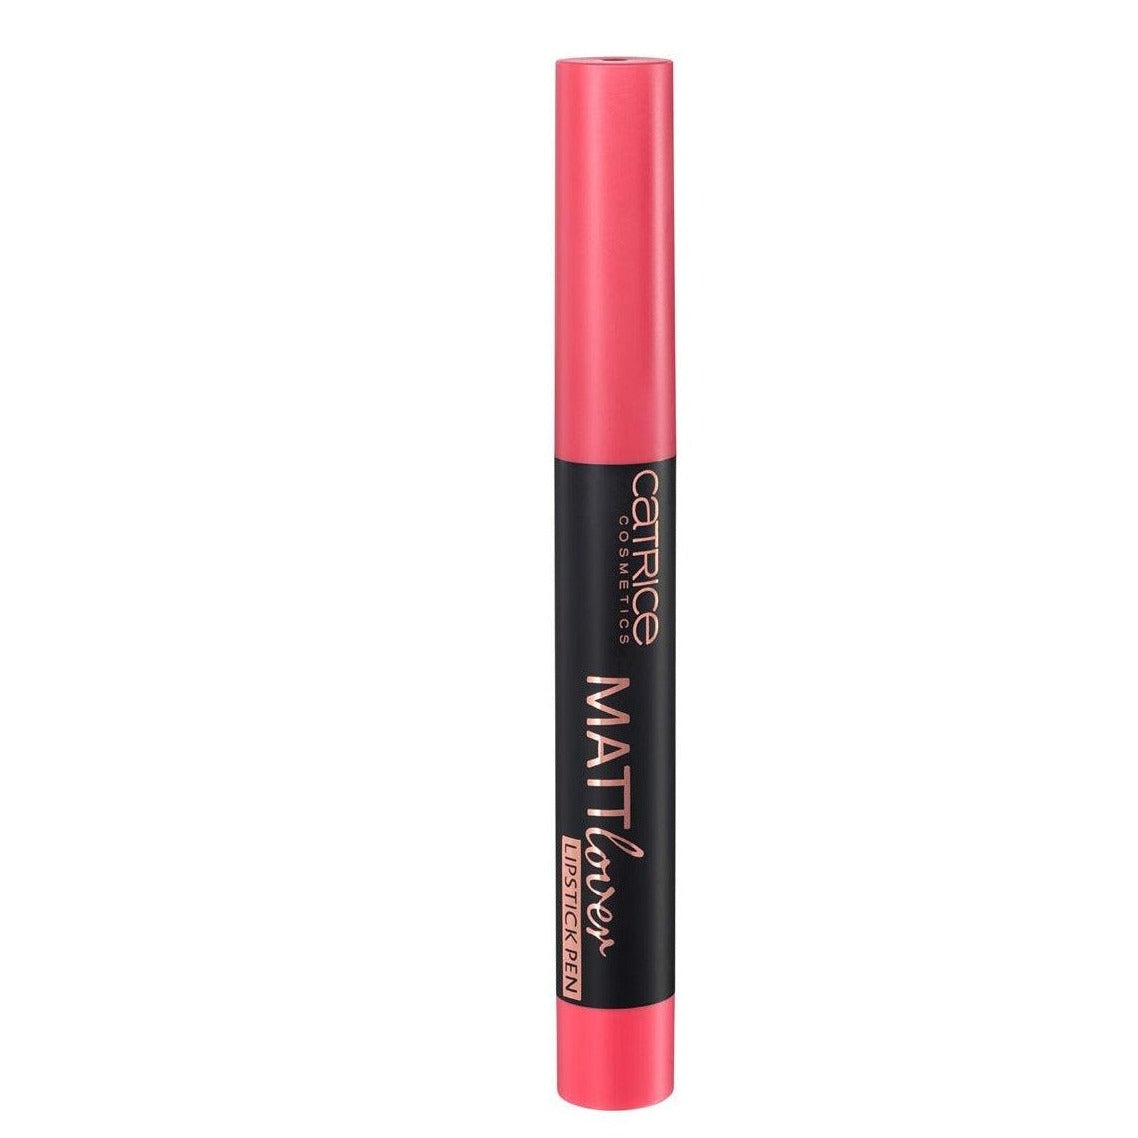 Catrice Mattlover Lipstick Pen 020 Tomato Red is Fab - Beauty Bounty